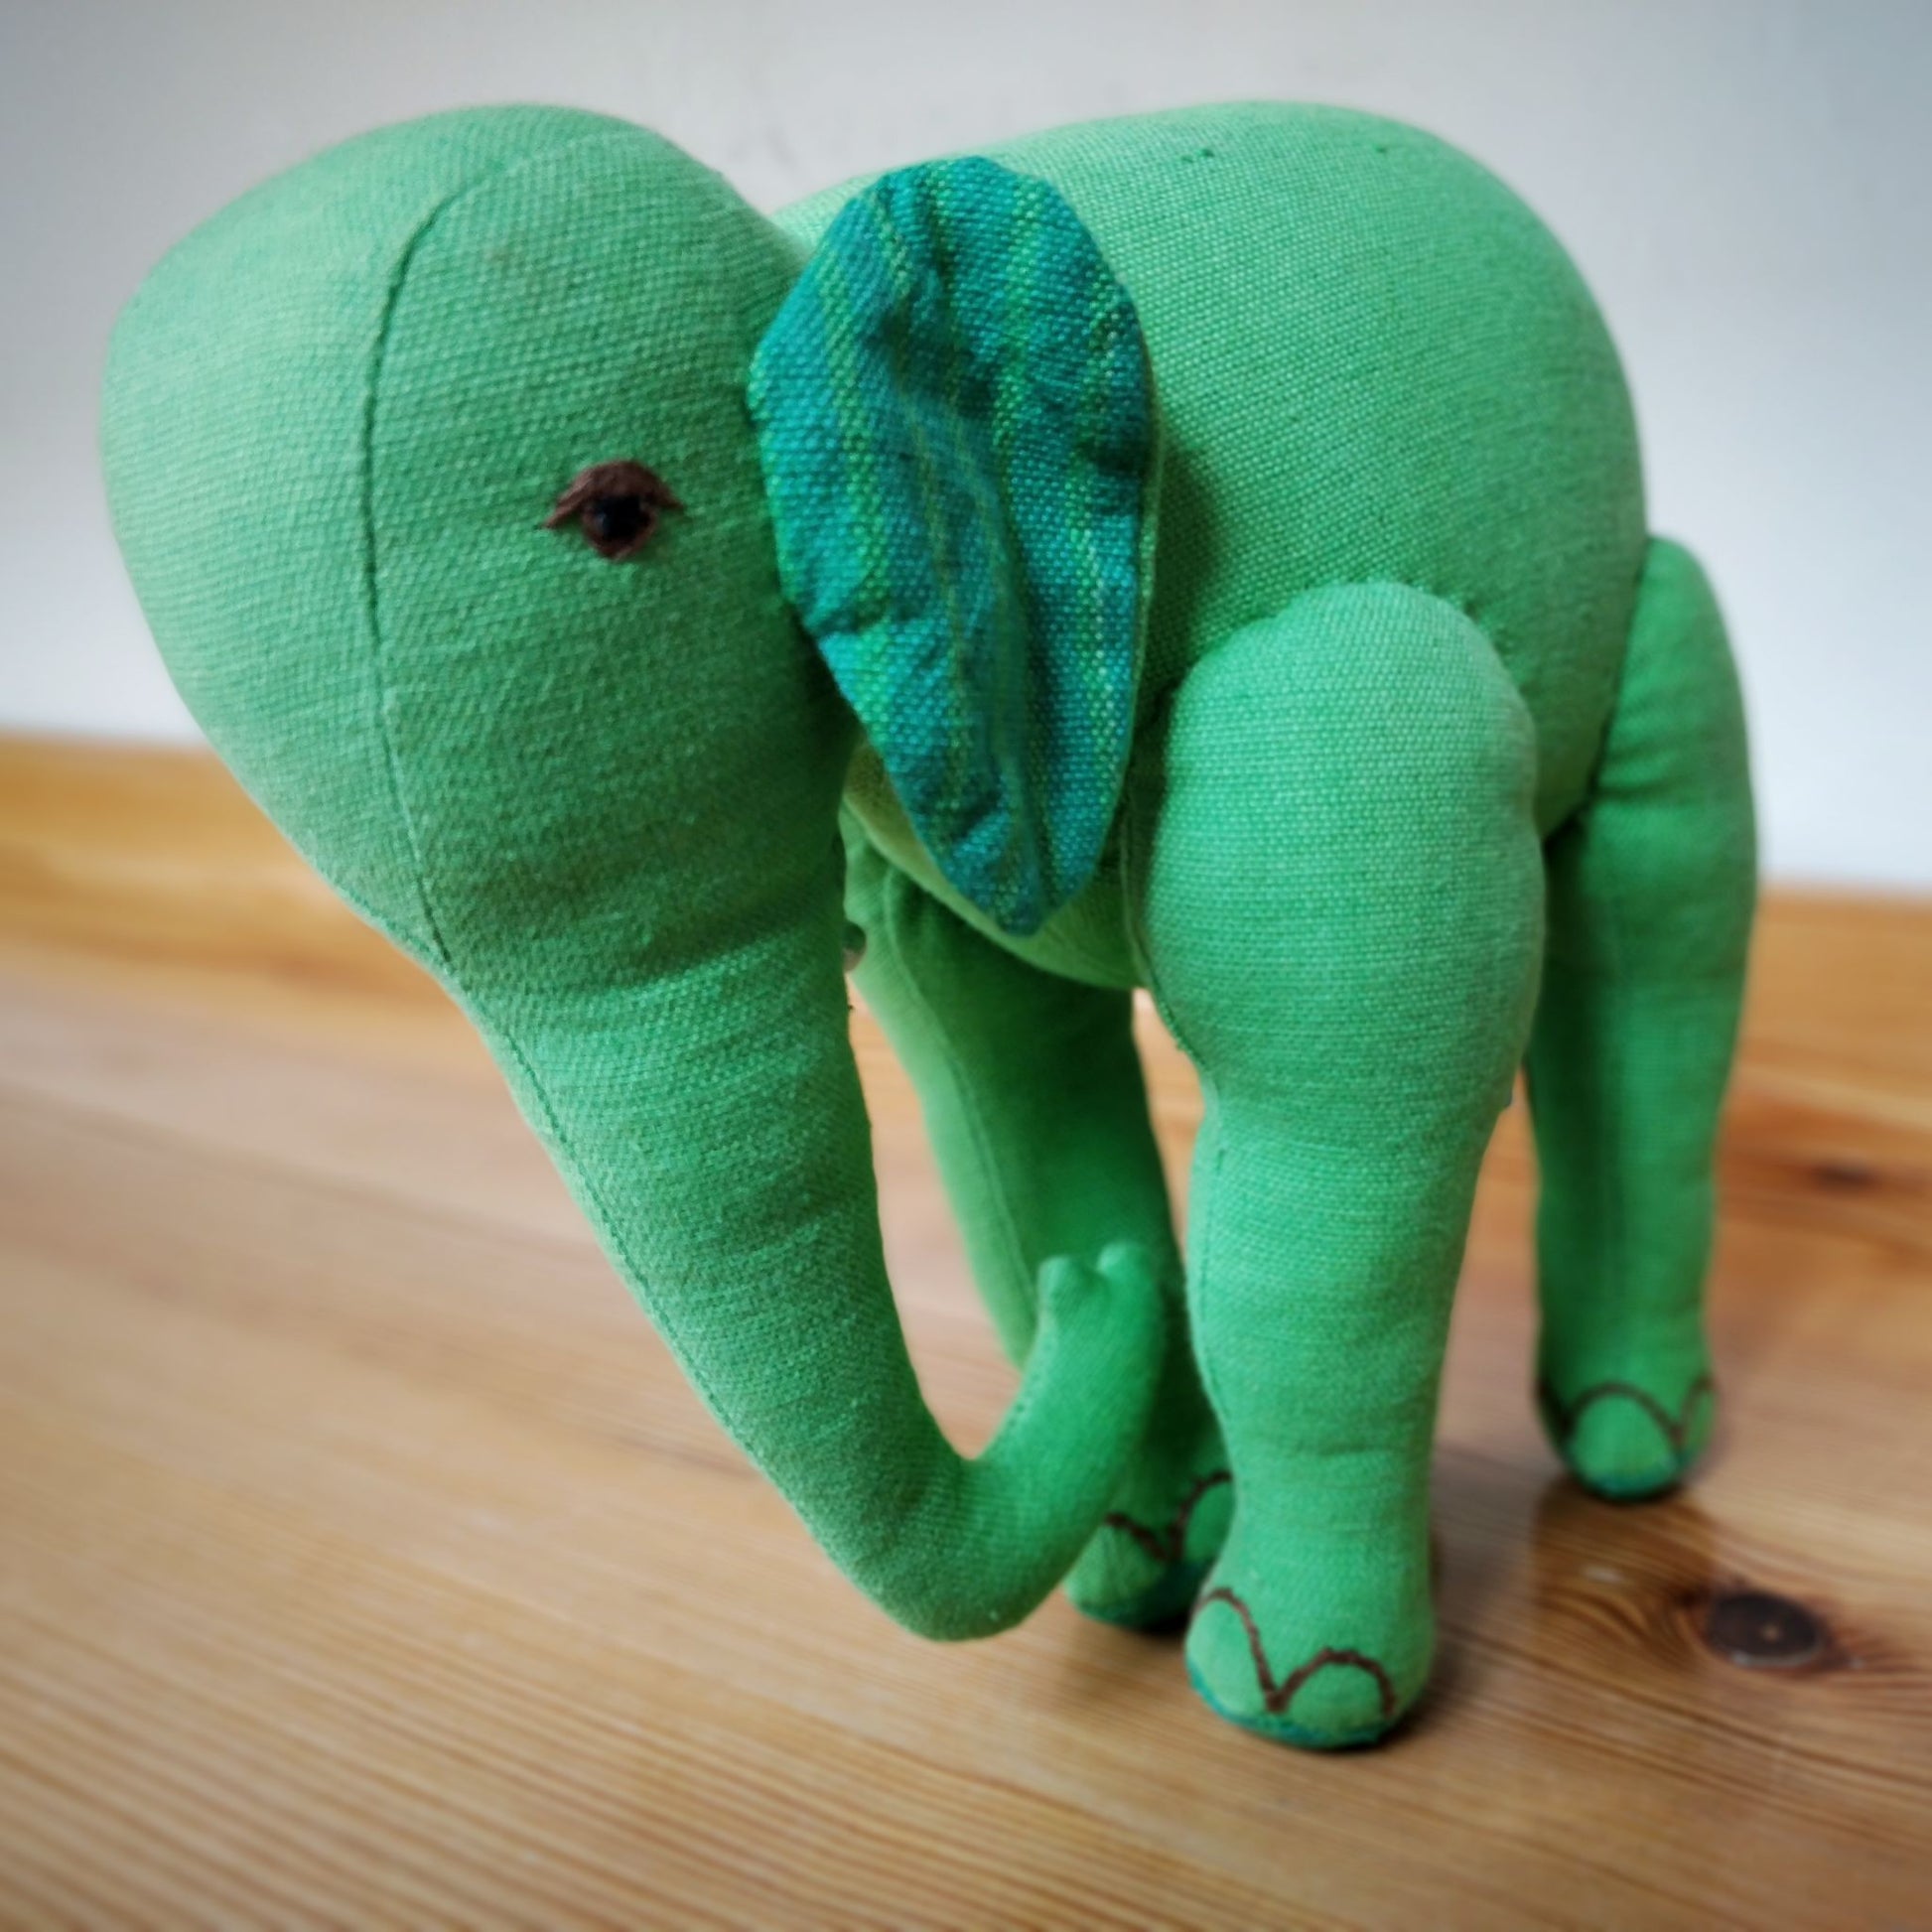 Elephant Soft Toy in Fair Trade Cotton  - Fair Trade toy